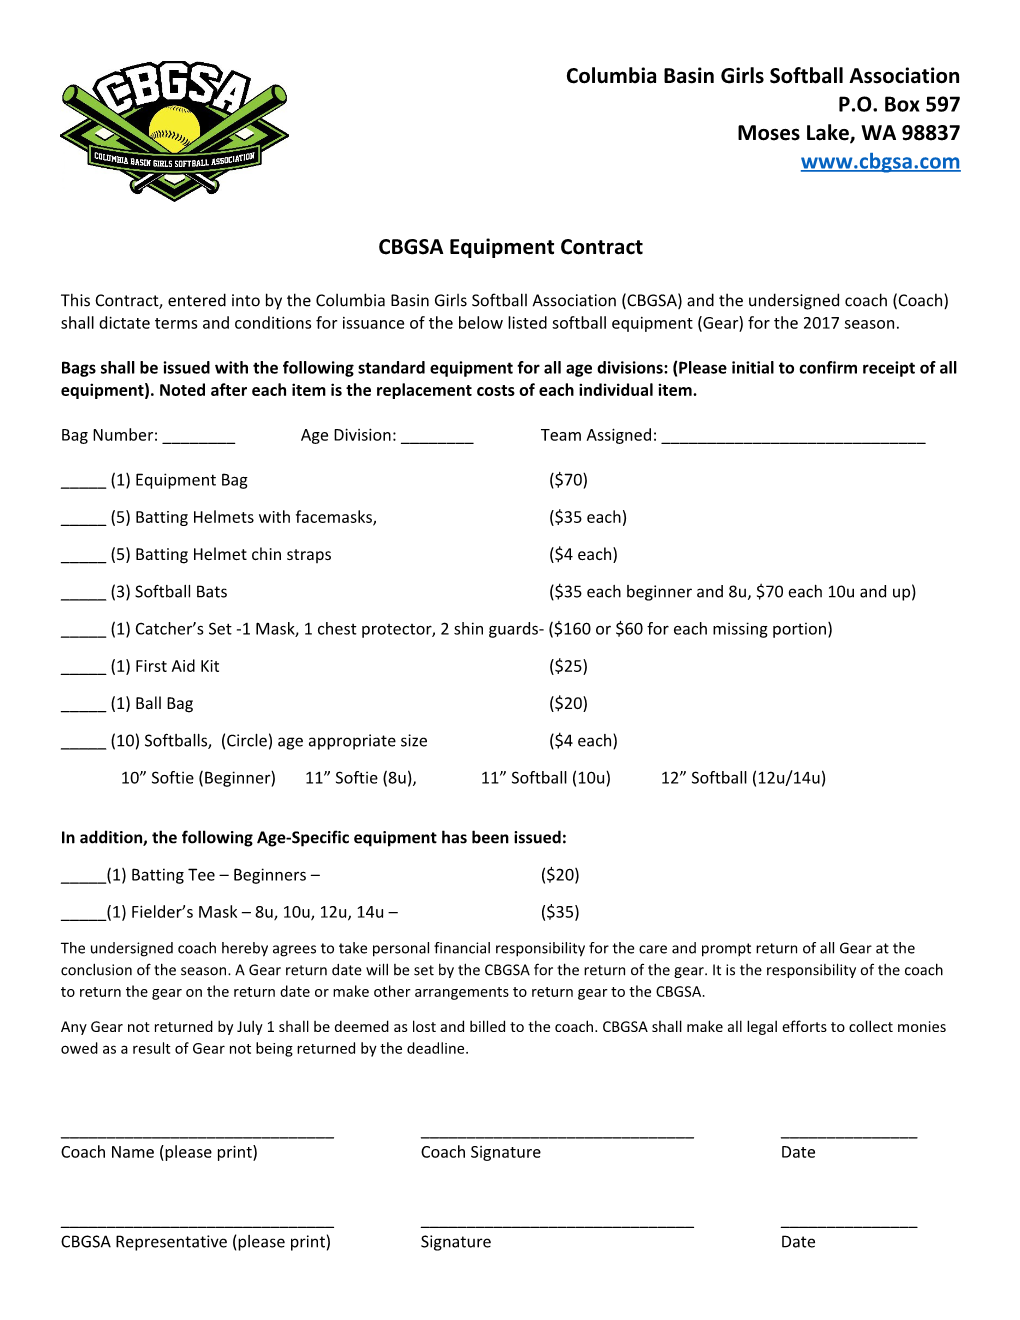 CBGSA Equipment Contract